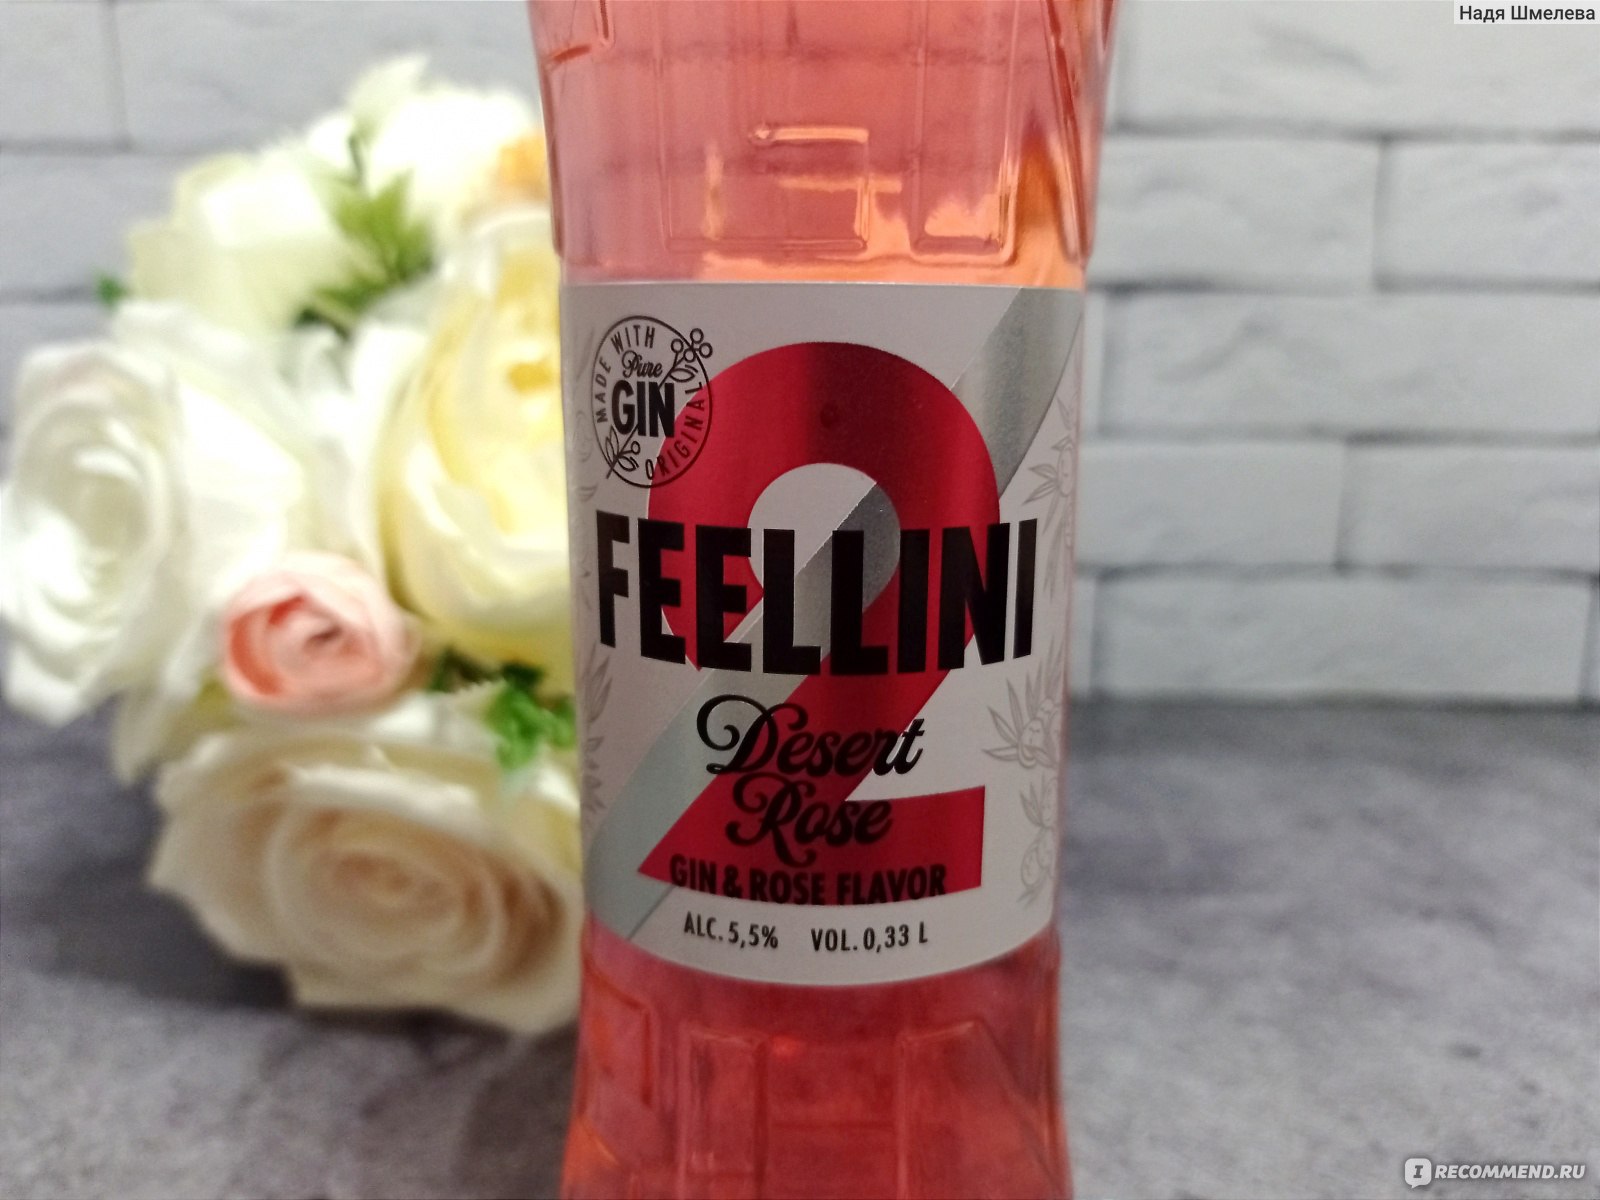 Feellini. Алкогольный напиток Feelini. Fellini алкогольный напиток. Розе напиток алкогольный. Слабоалкоголка Феллини лимонад.